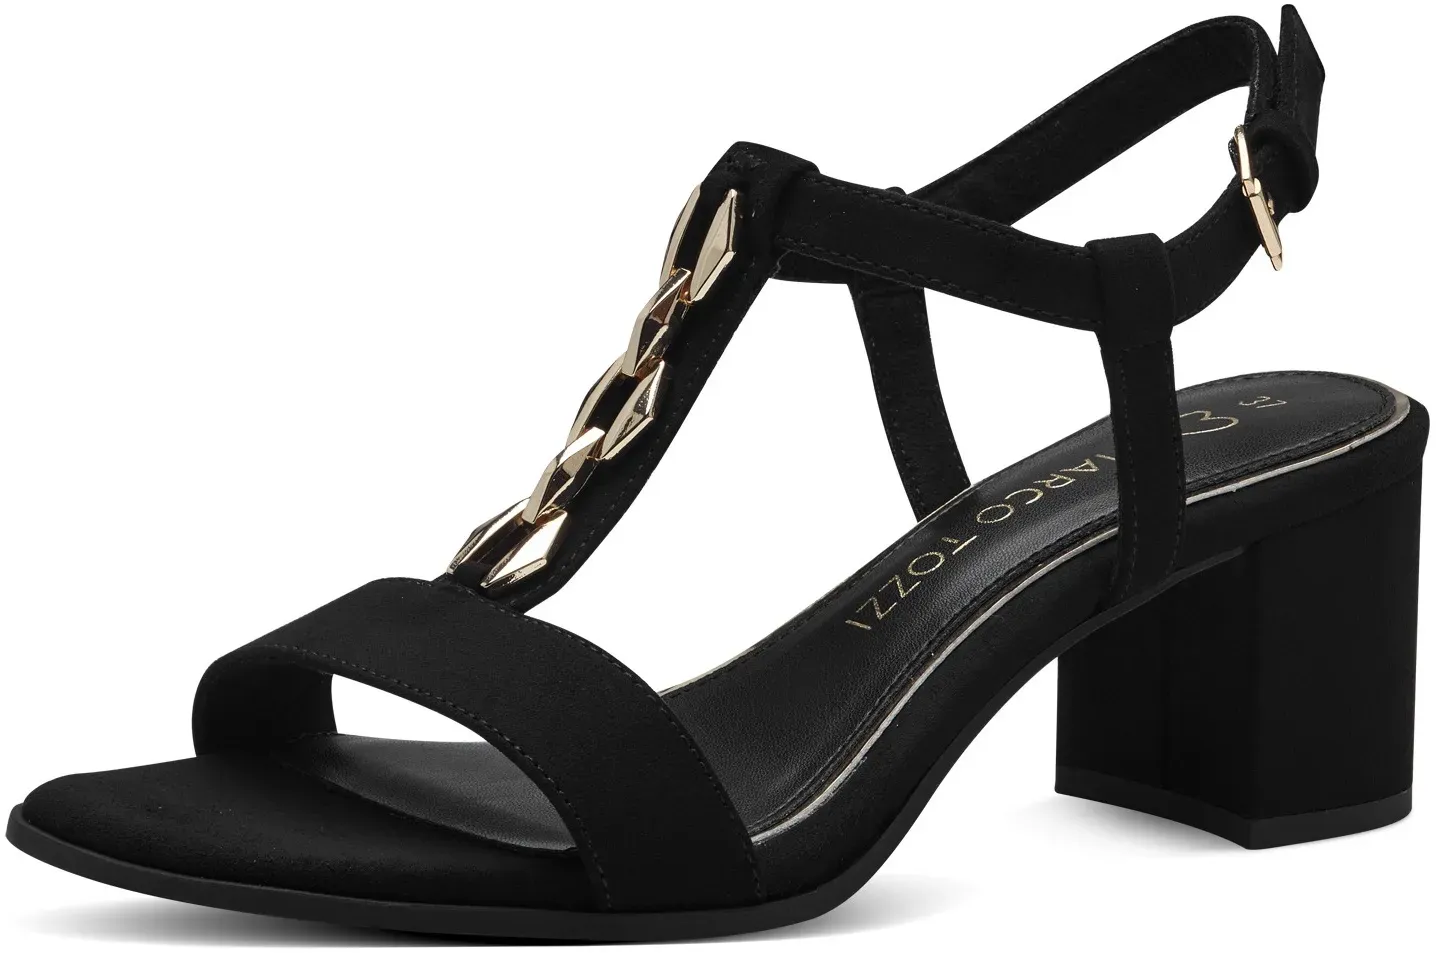 Sandalette MARCO TOZZI Gr. 38, schwarz Damen Schuhe Marco Tozzi Sommerschuh, Sandale, Blockabsatz, mit Schmuckelement